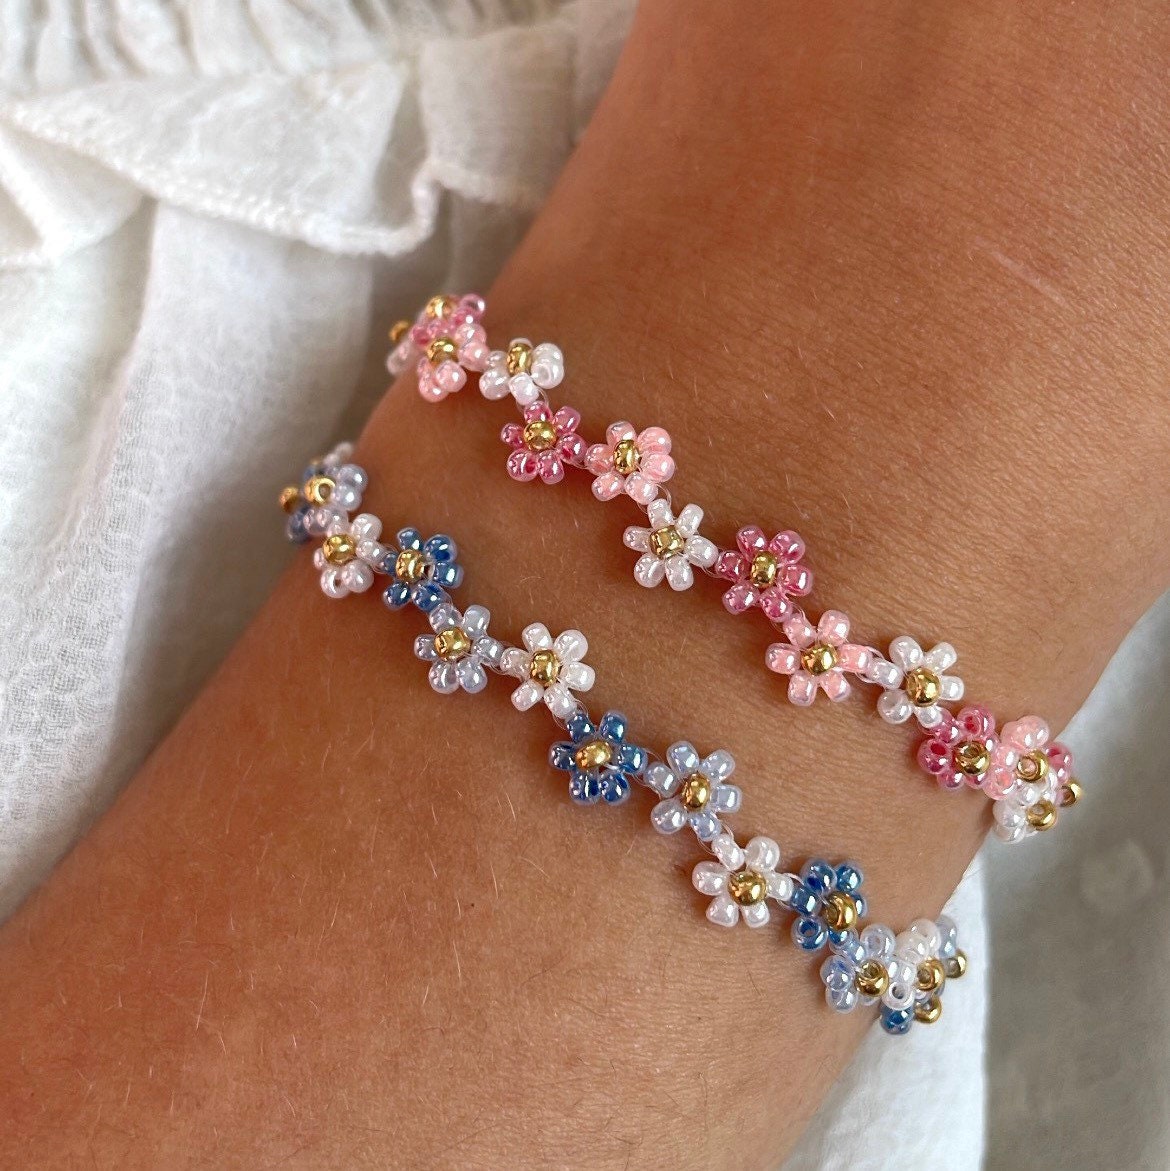 Flower Bracelet in Pink, Blue & White Zig Zag Floral Pattern